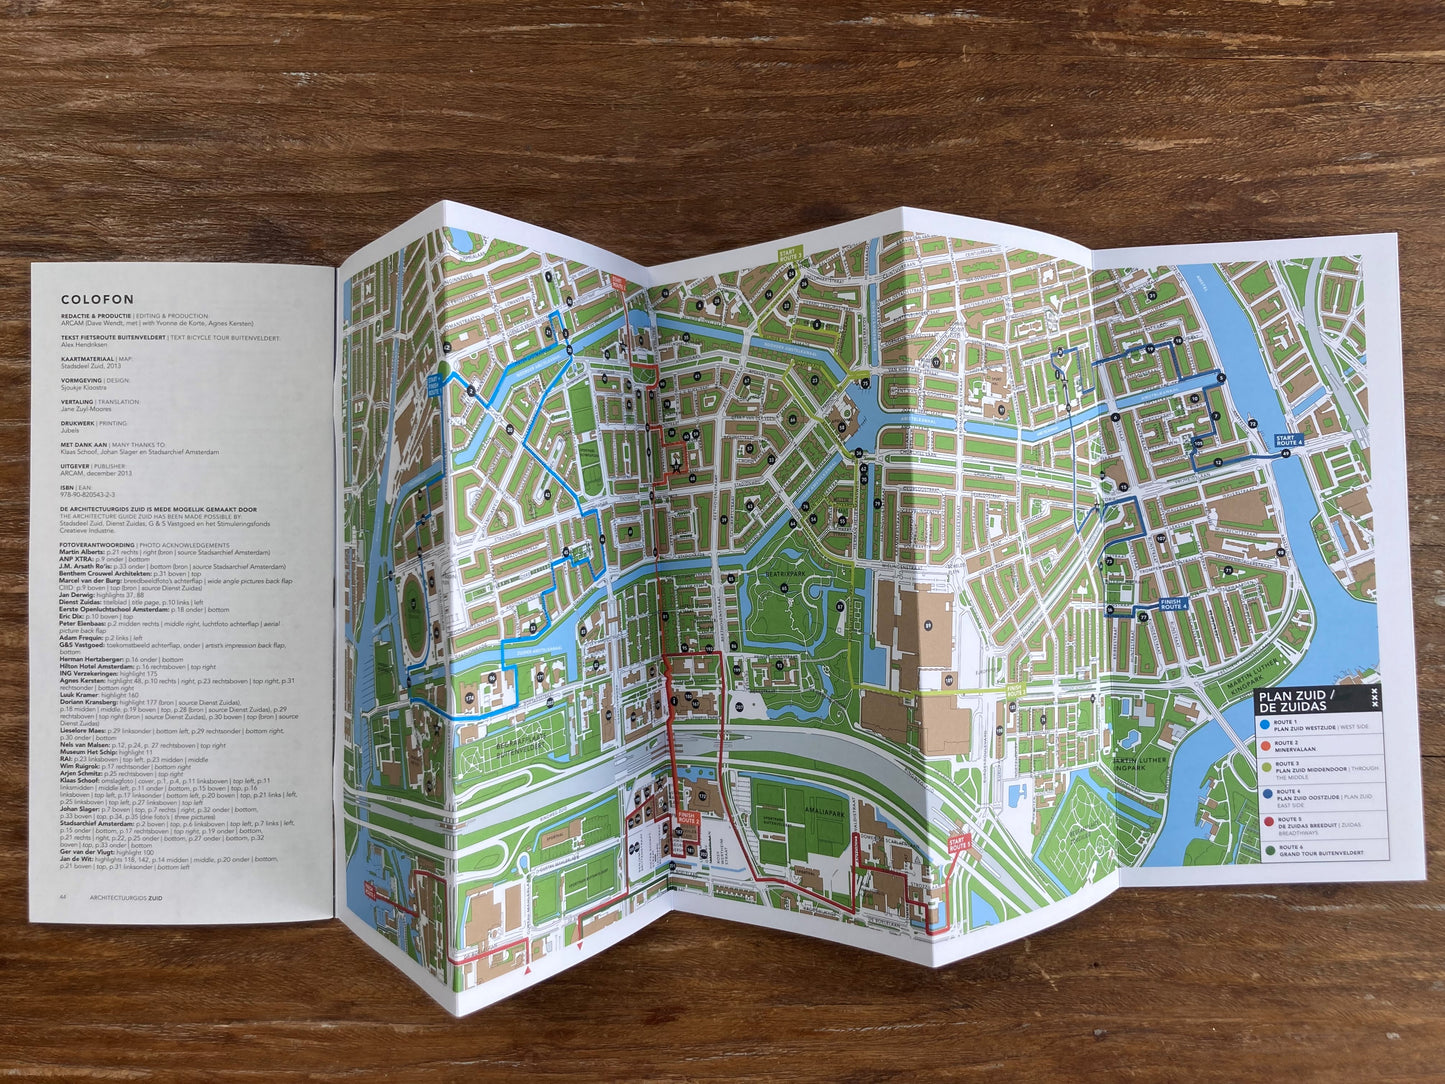 Architecture Guide South: Plan South, Garden City Buitenveldert, the Zuidas